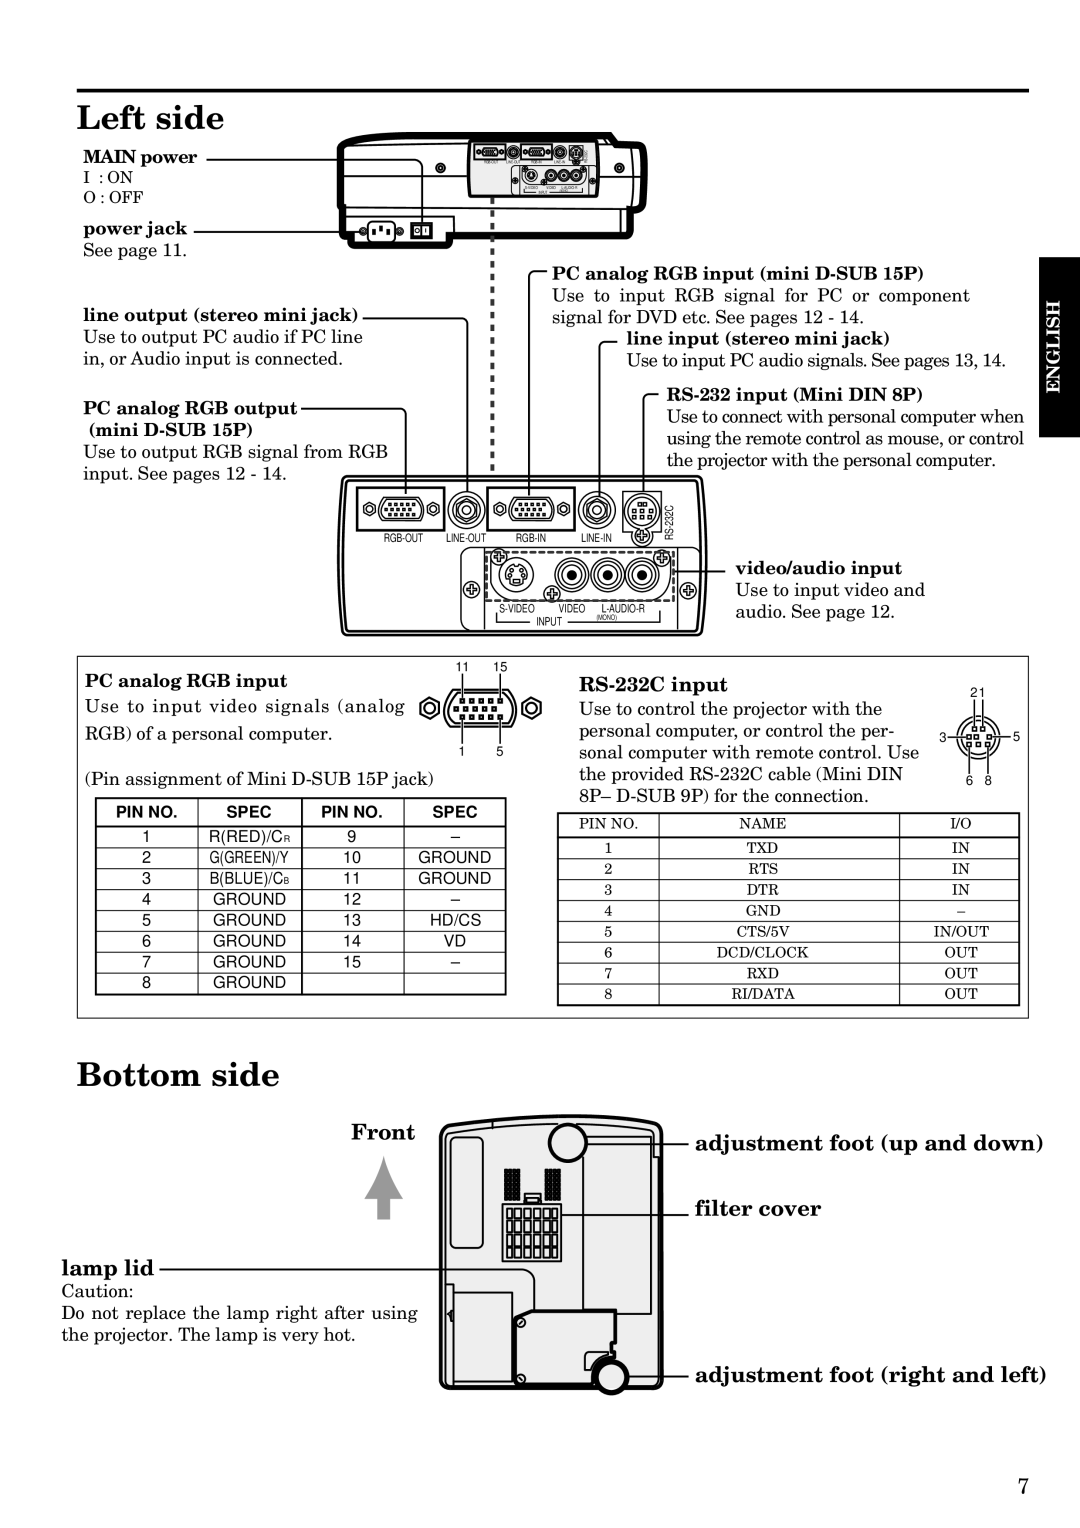 Mitsubishi Electronics LVP-S120A user manual Front Lamp lid 